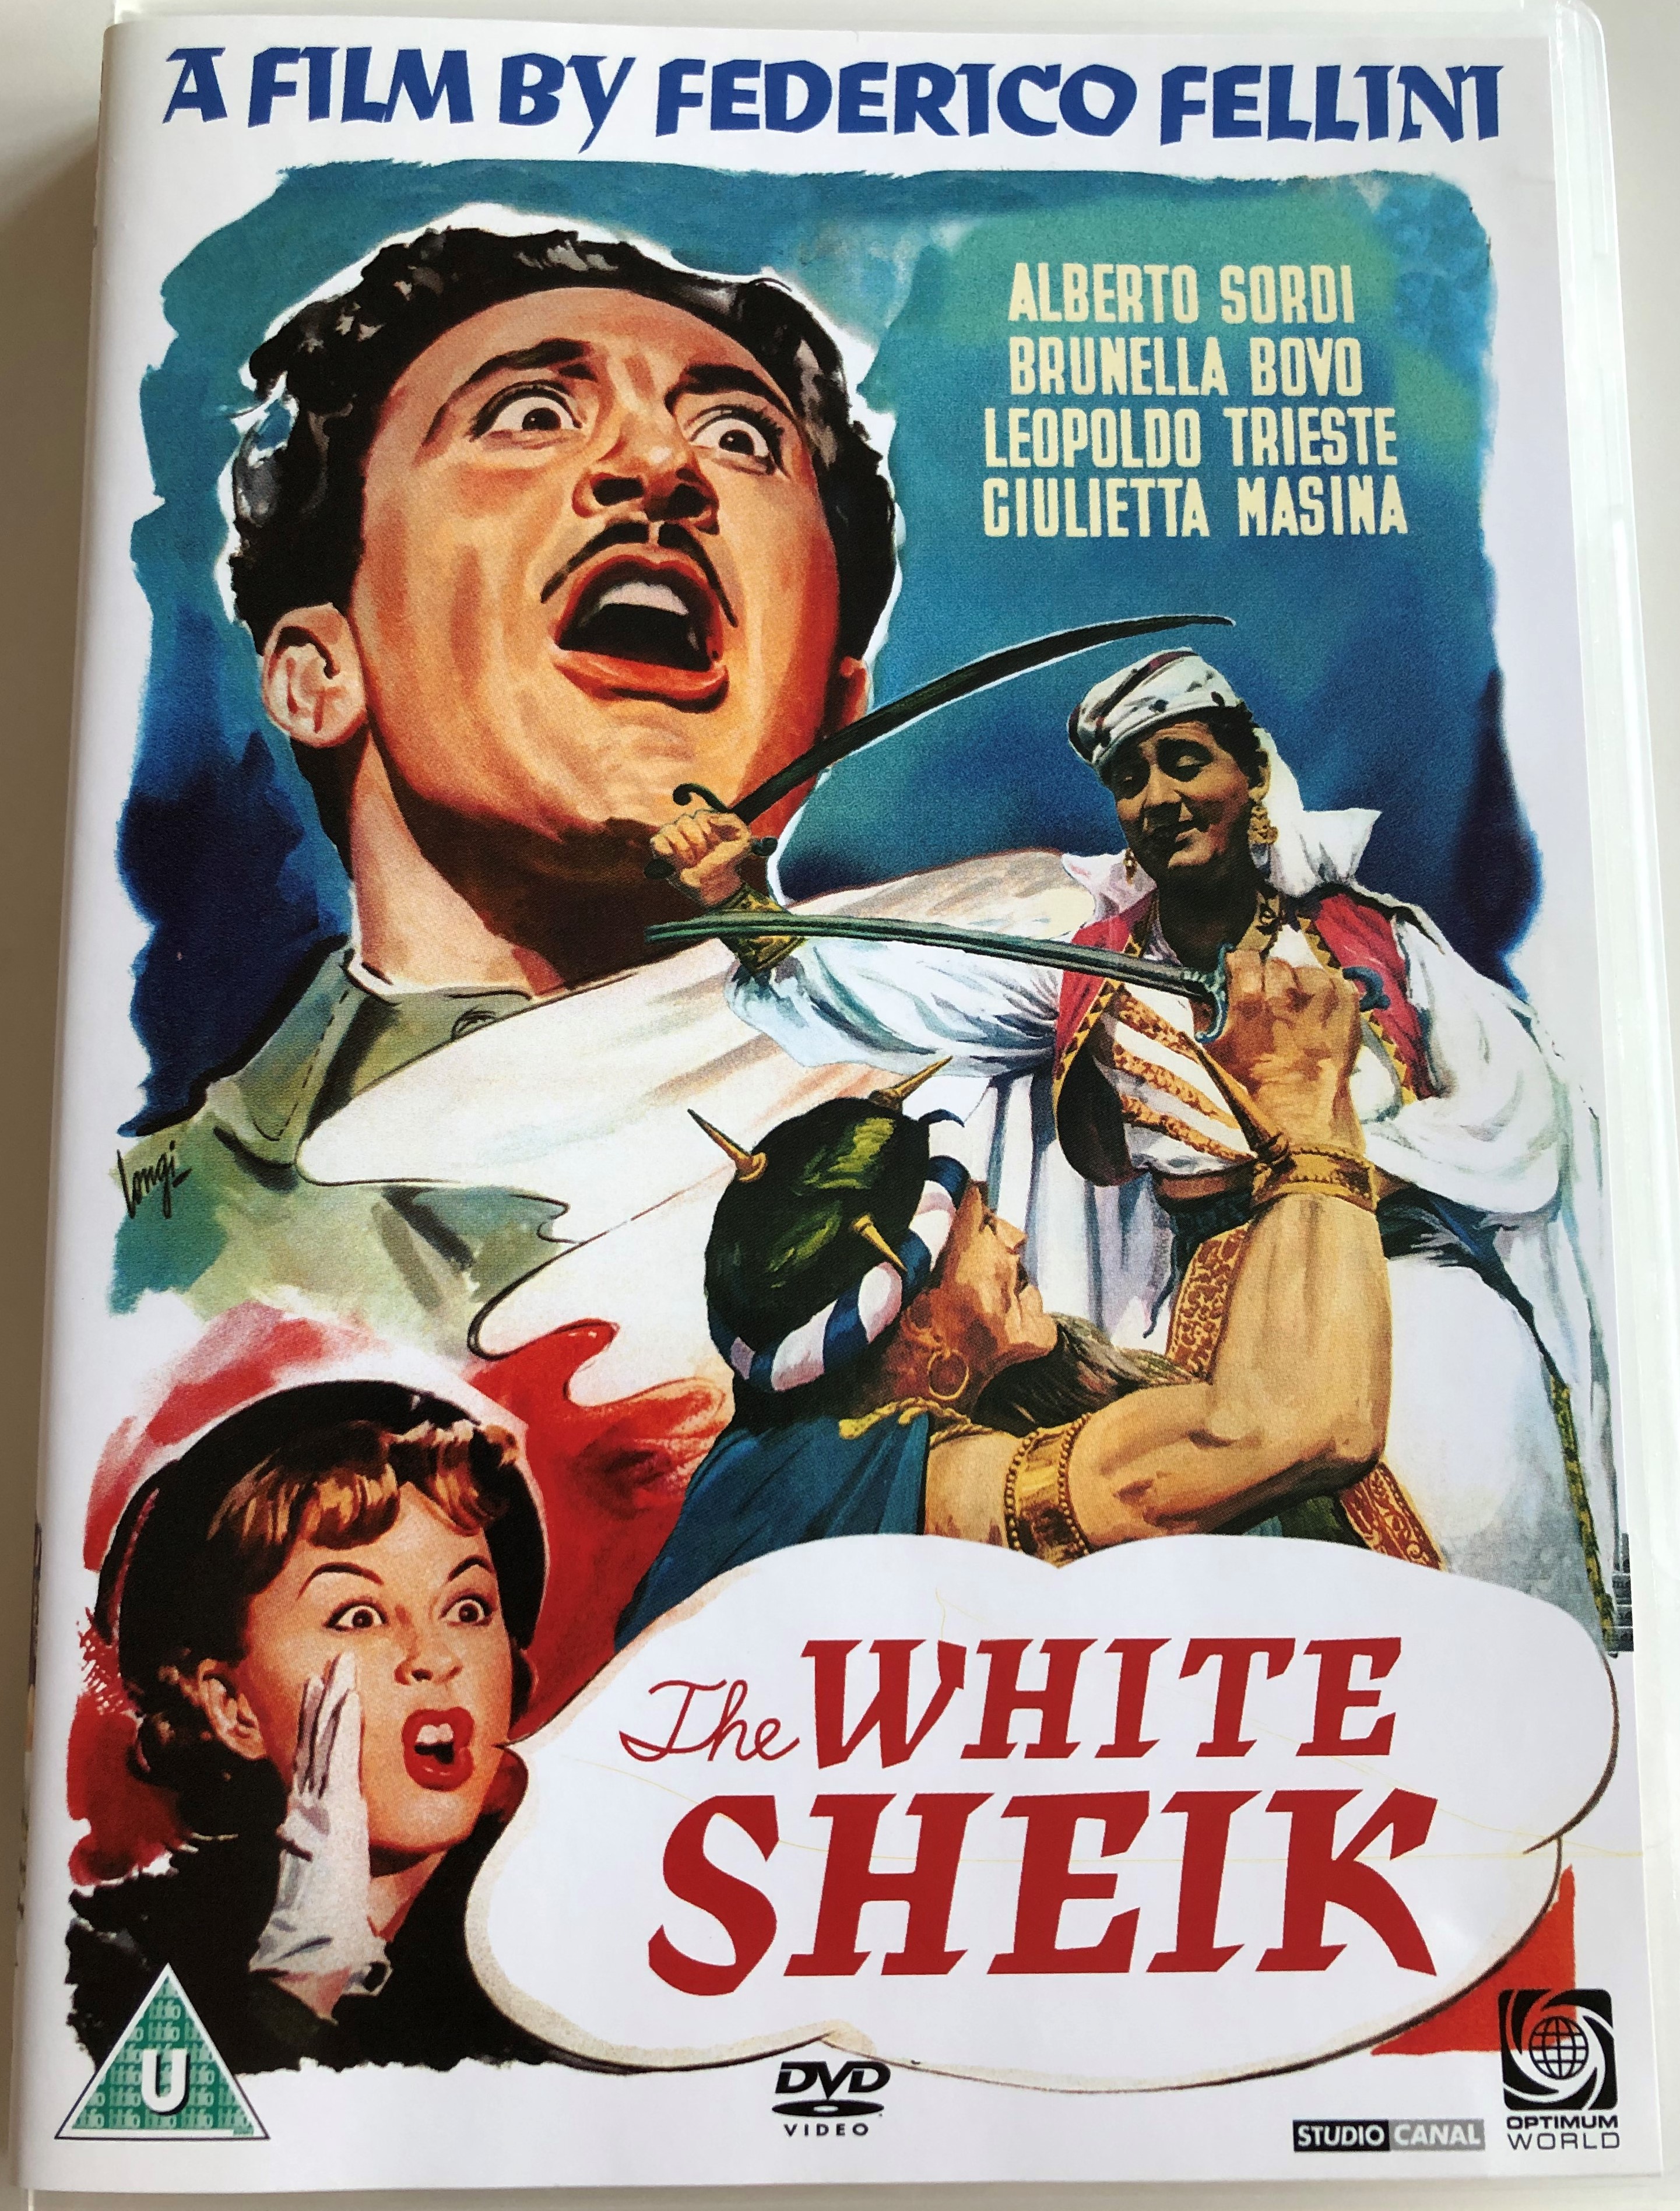  The White Sheik DVD 1952 Lo sceicco bianco  1.JPG